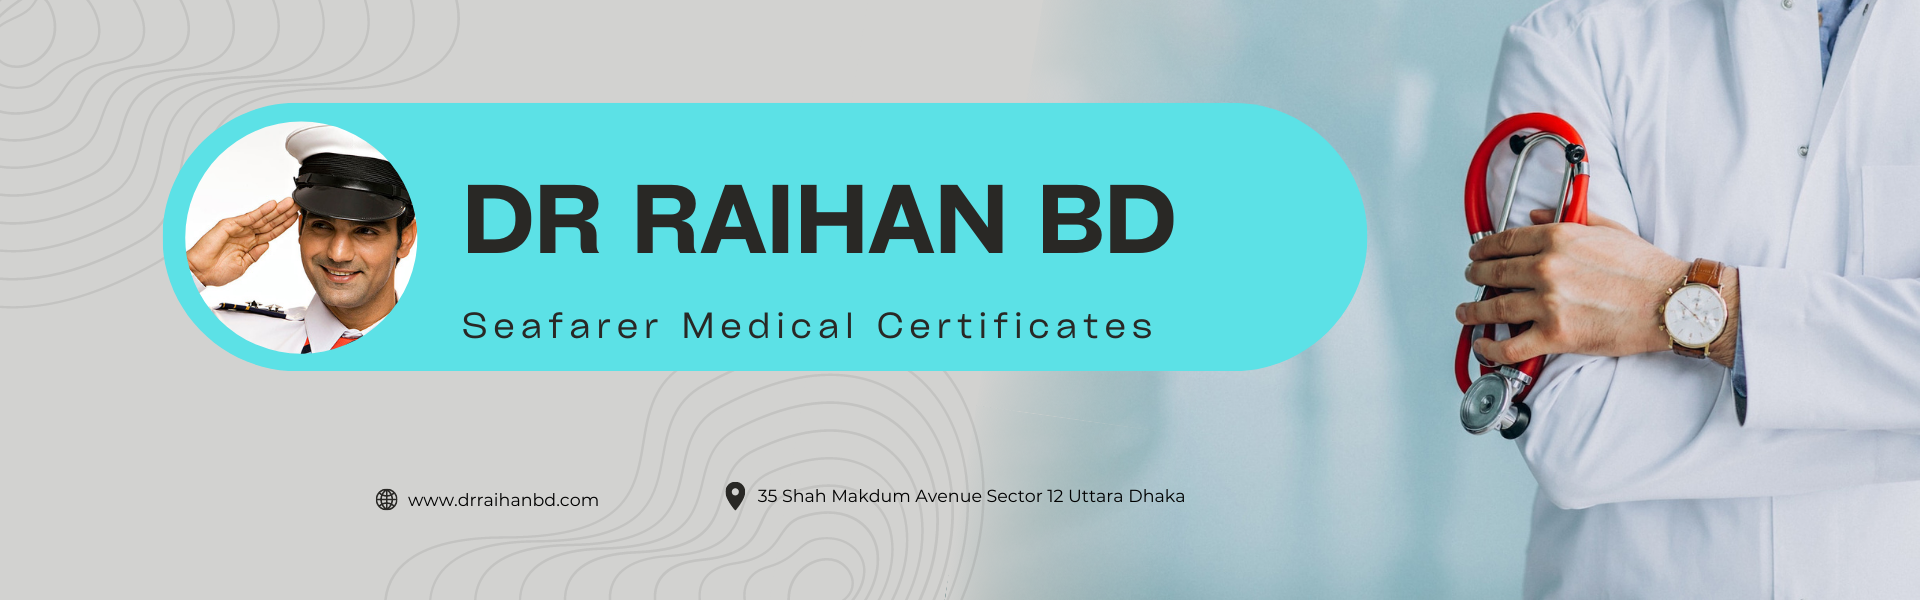 Dr Raihan BD Front Page Banner